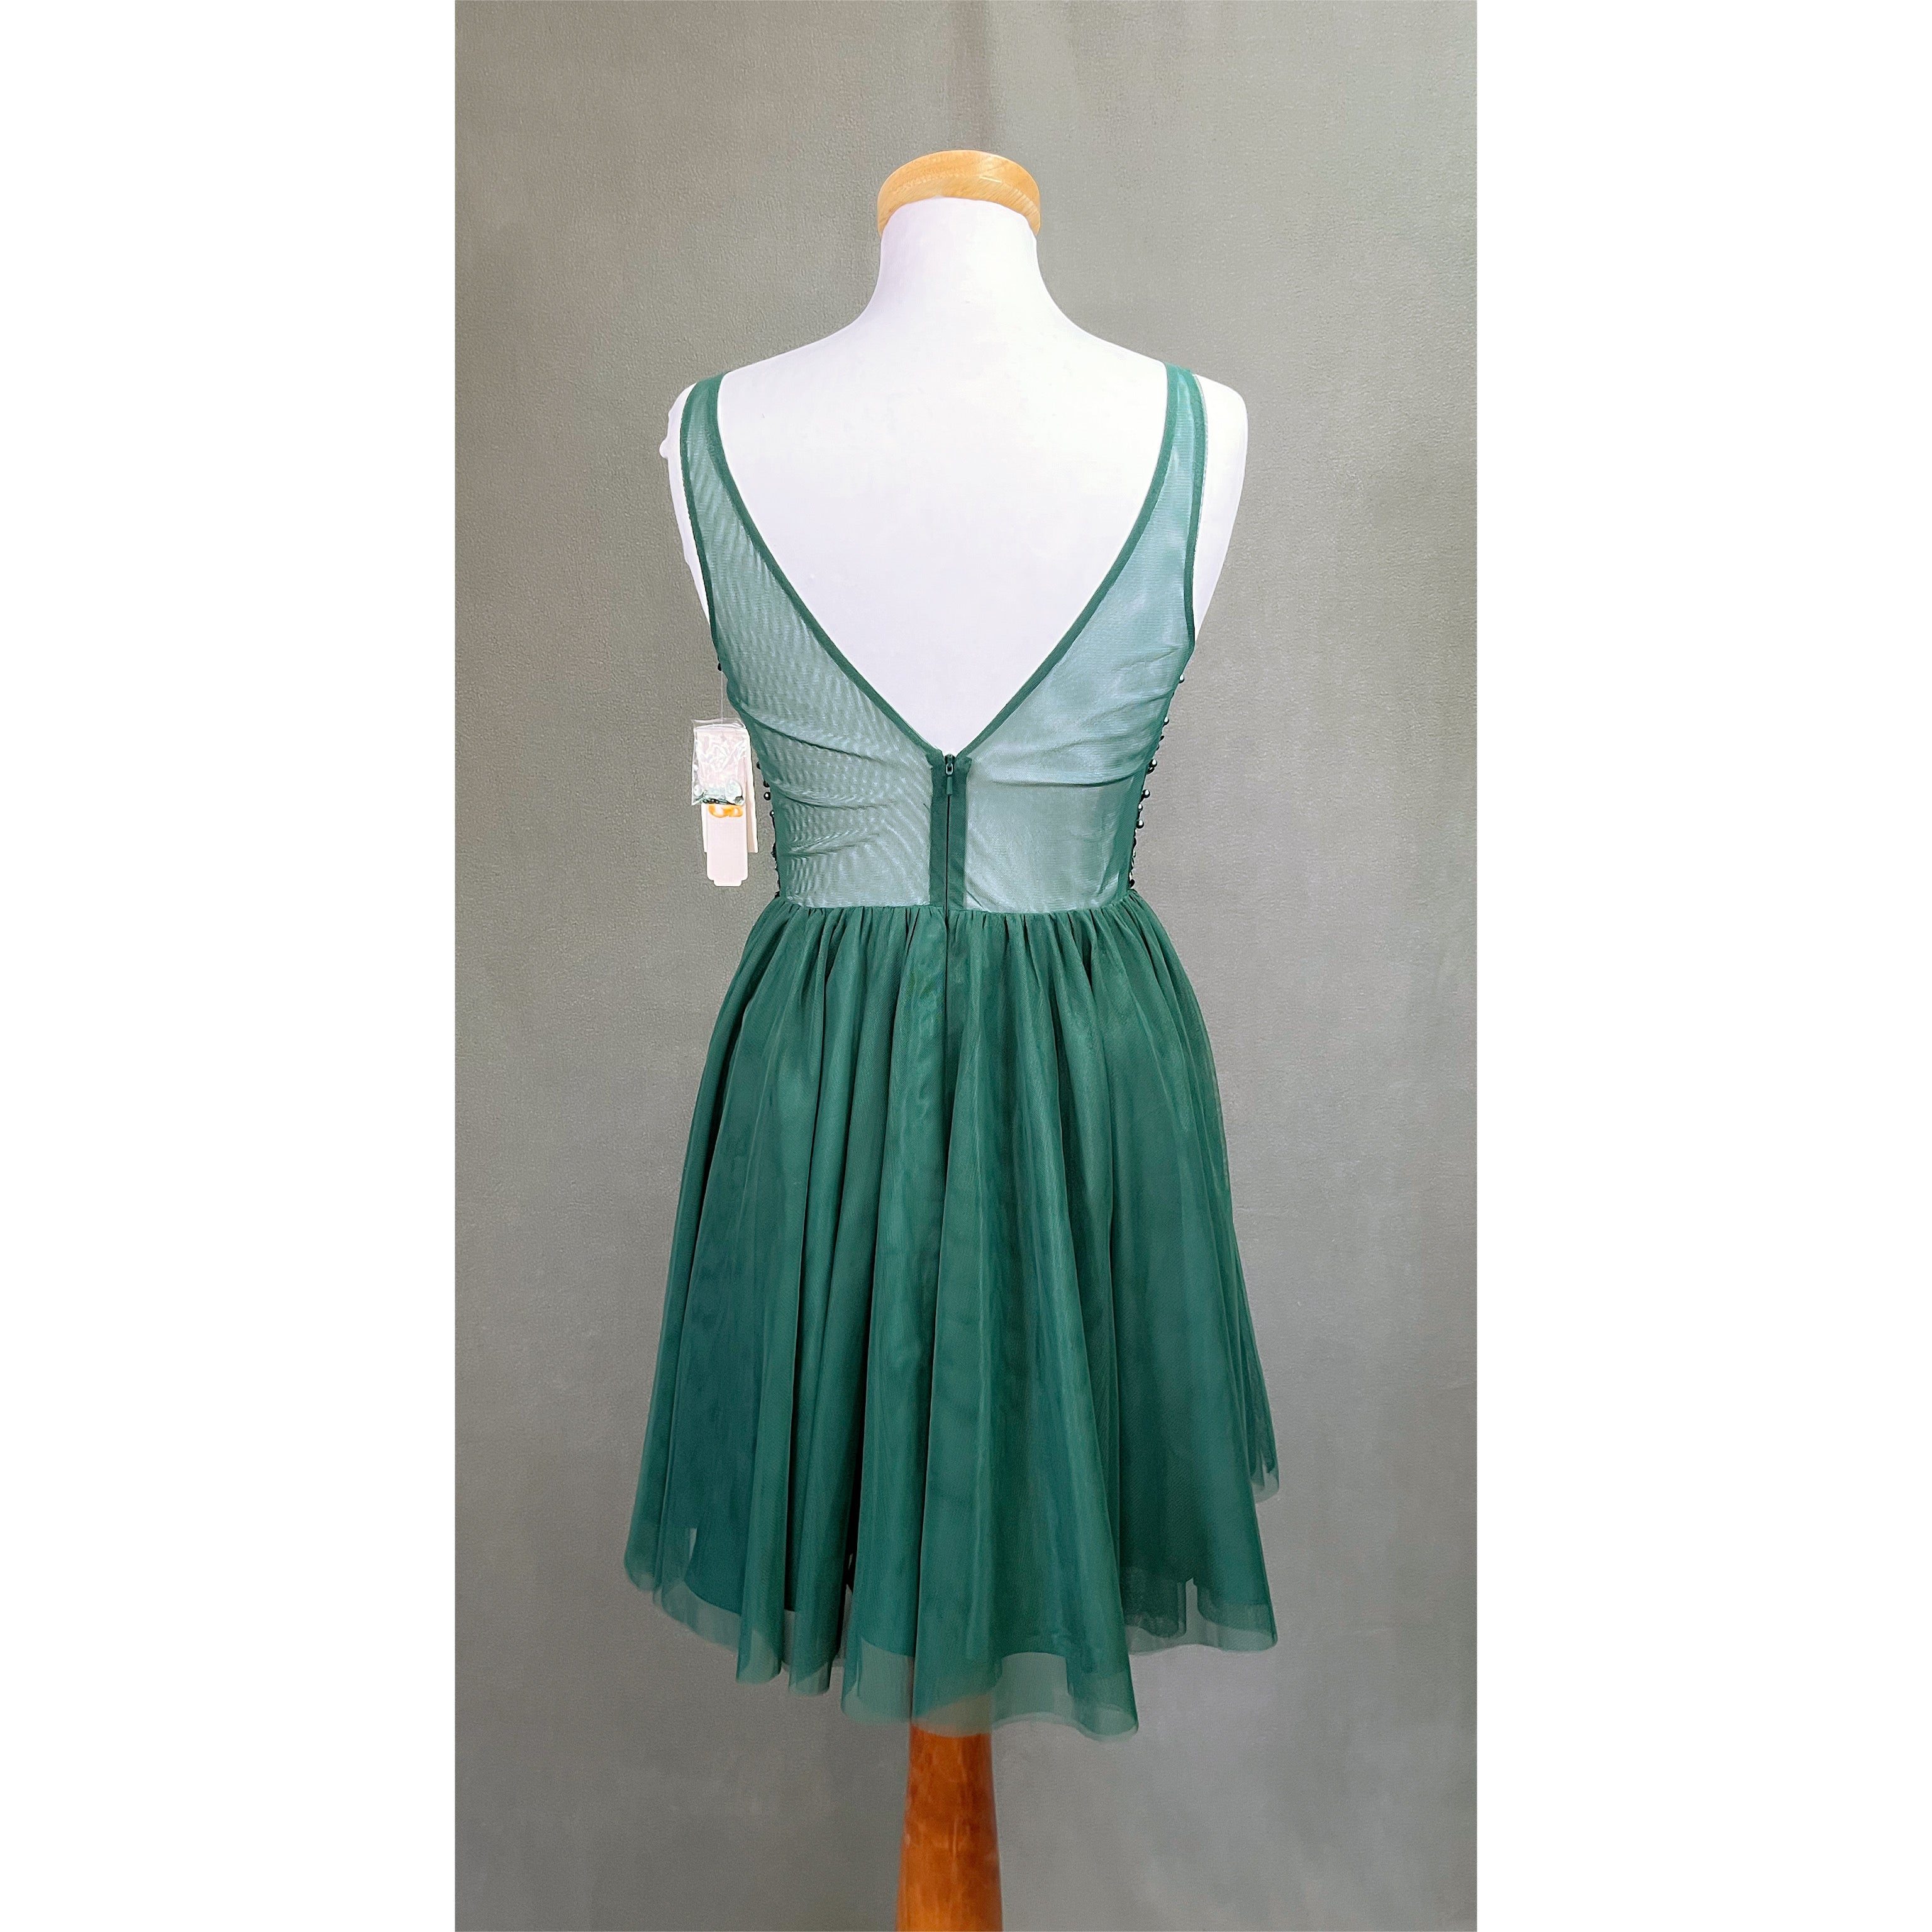 Gianni Bini evergreen dress, size 3, NEW WITH TAGS!